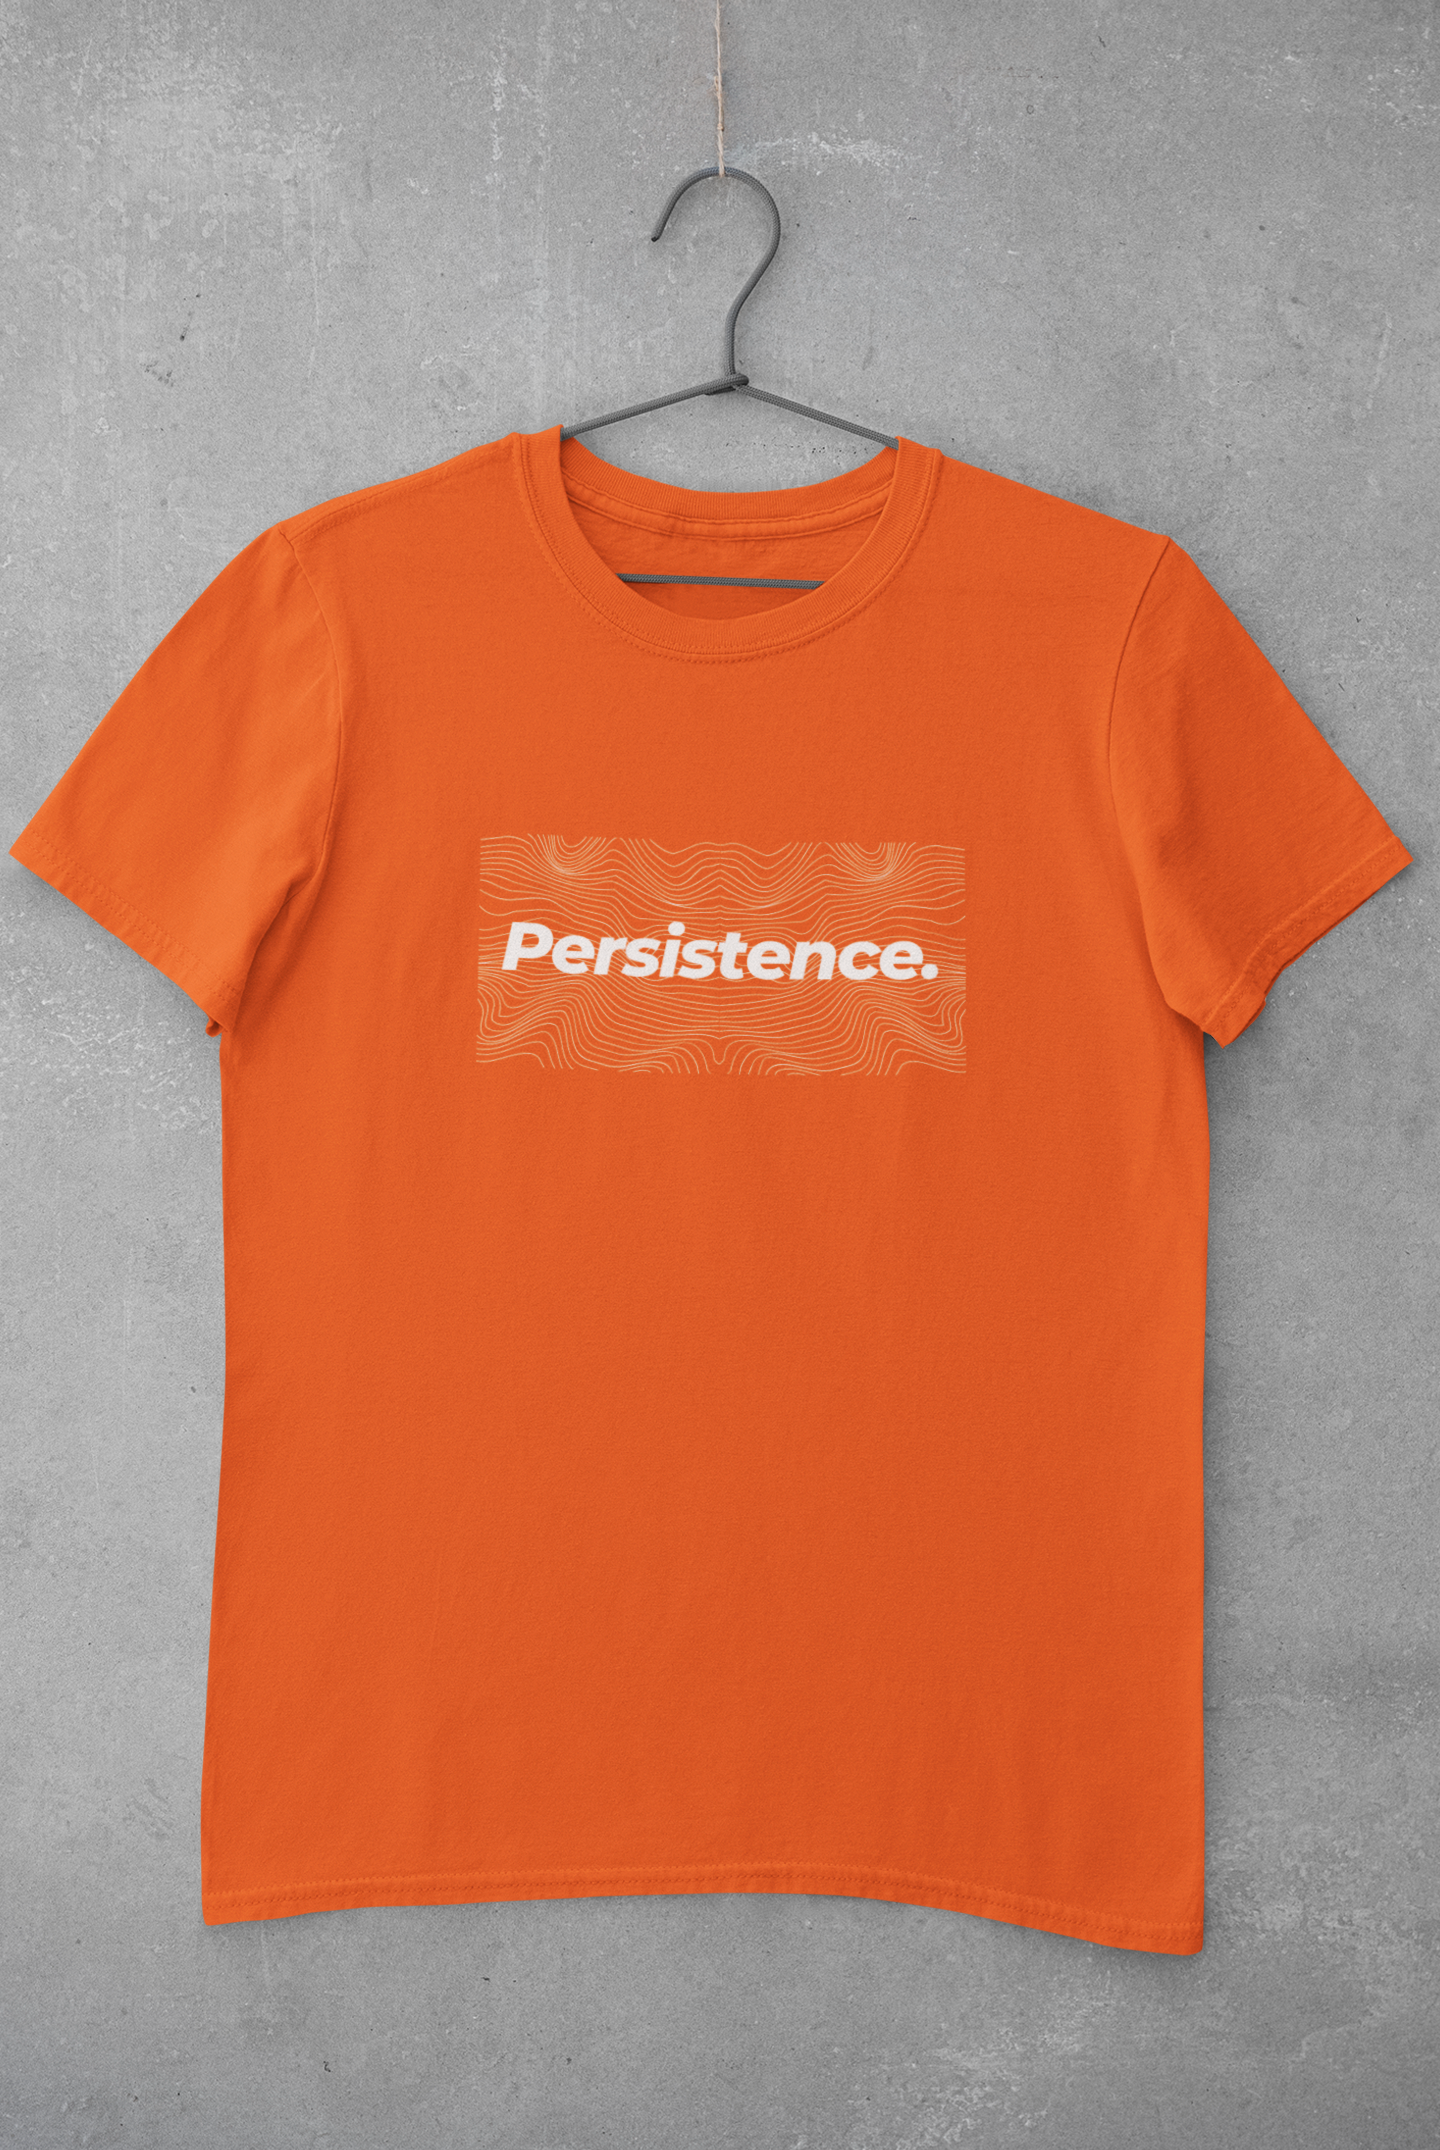 'Persistence' T-Shirt